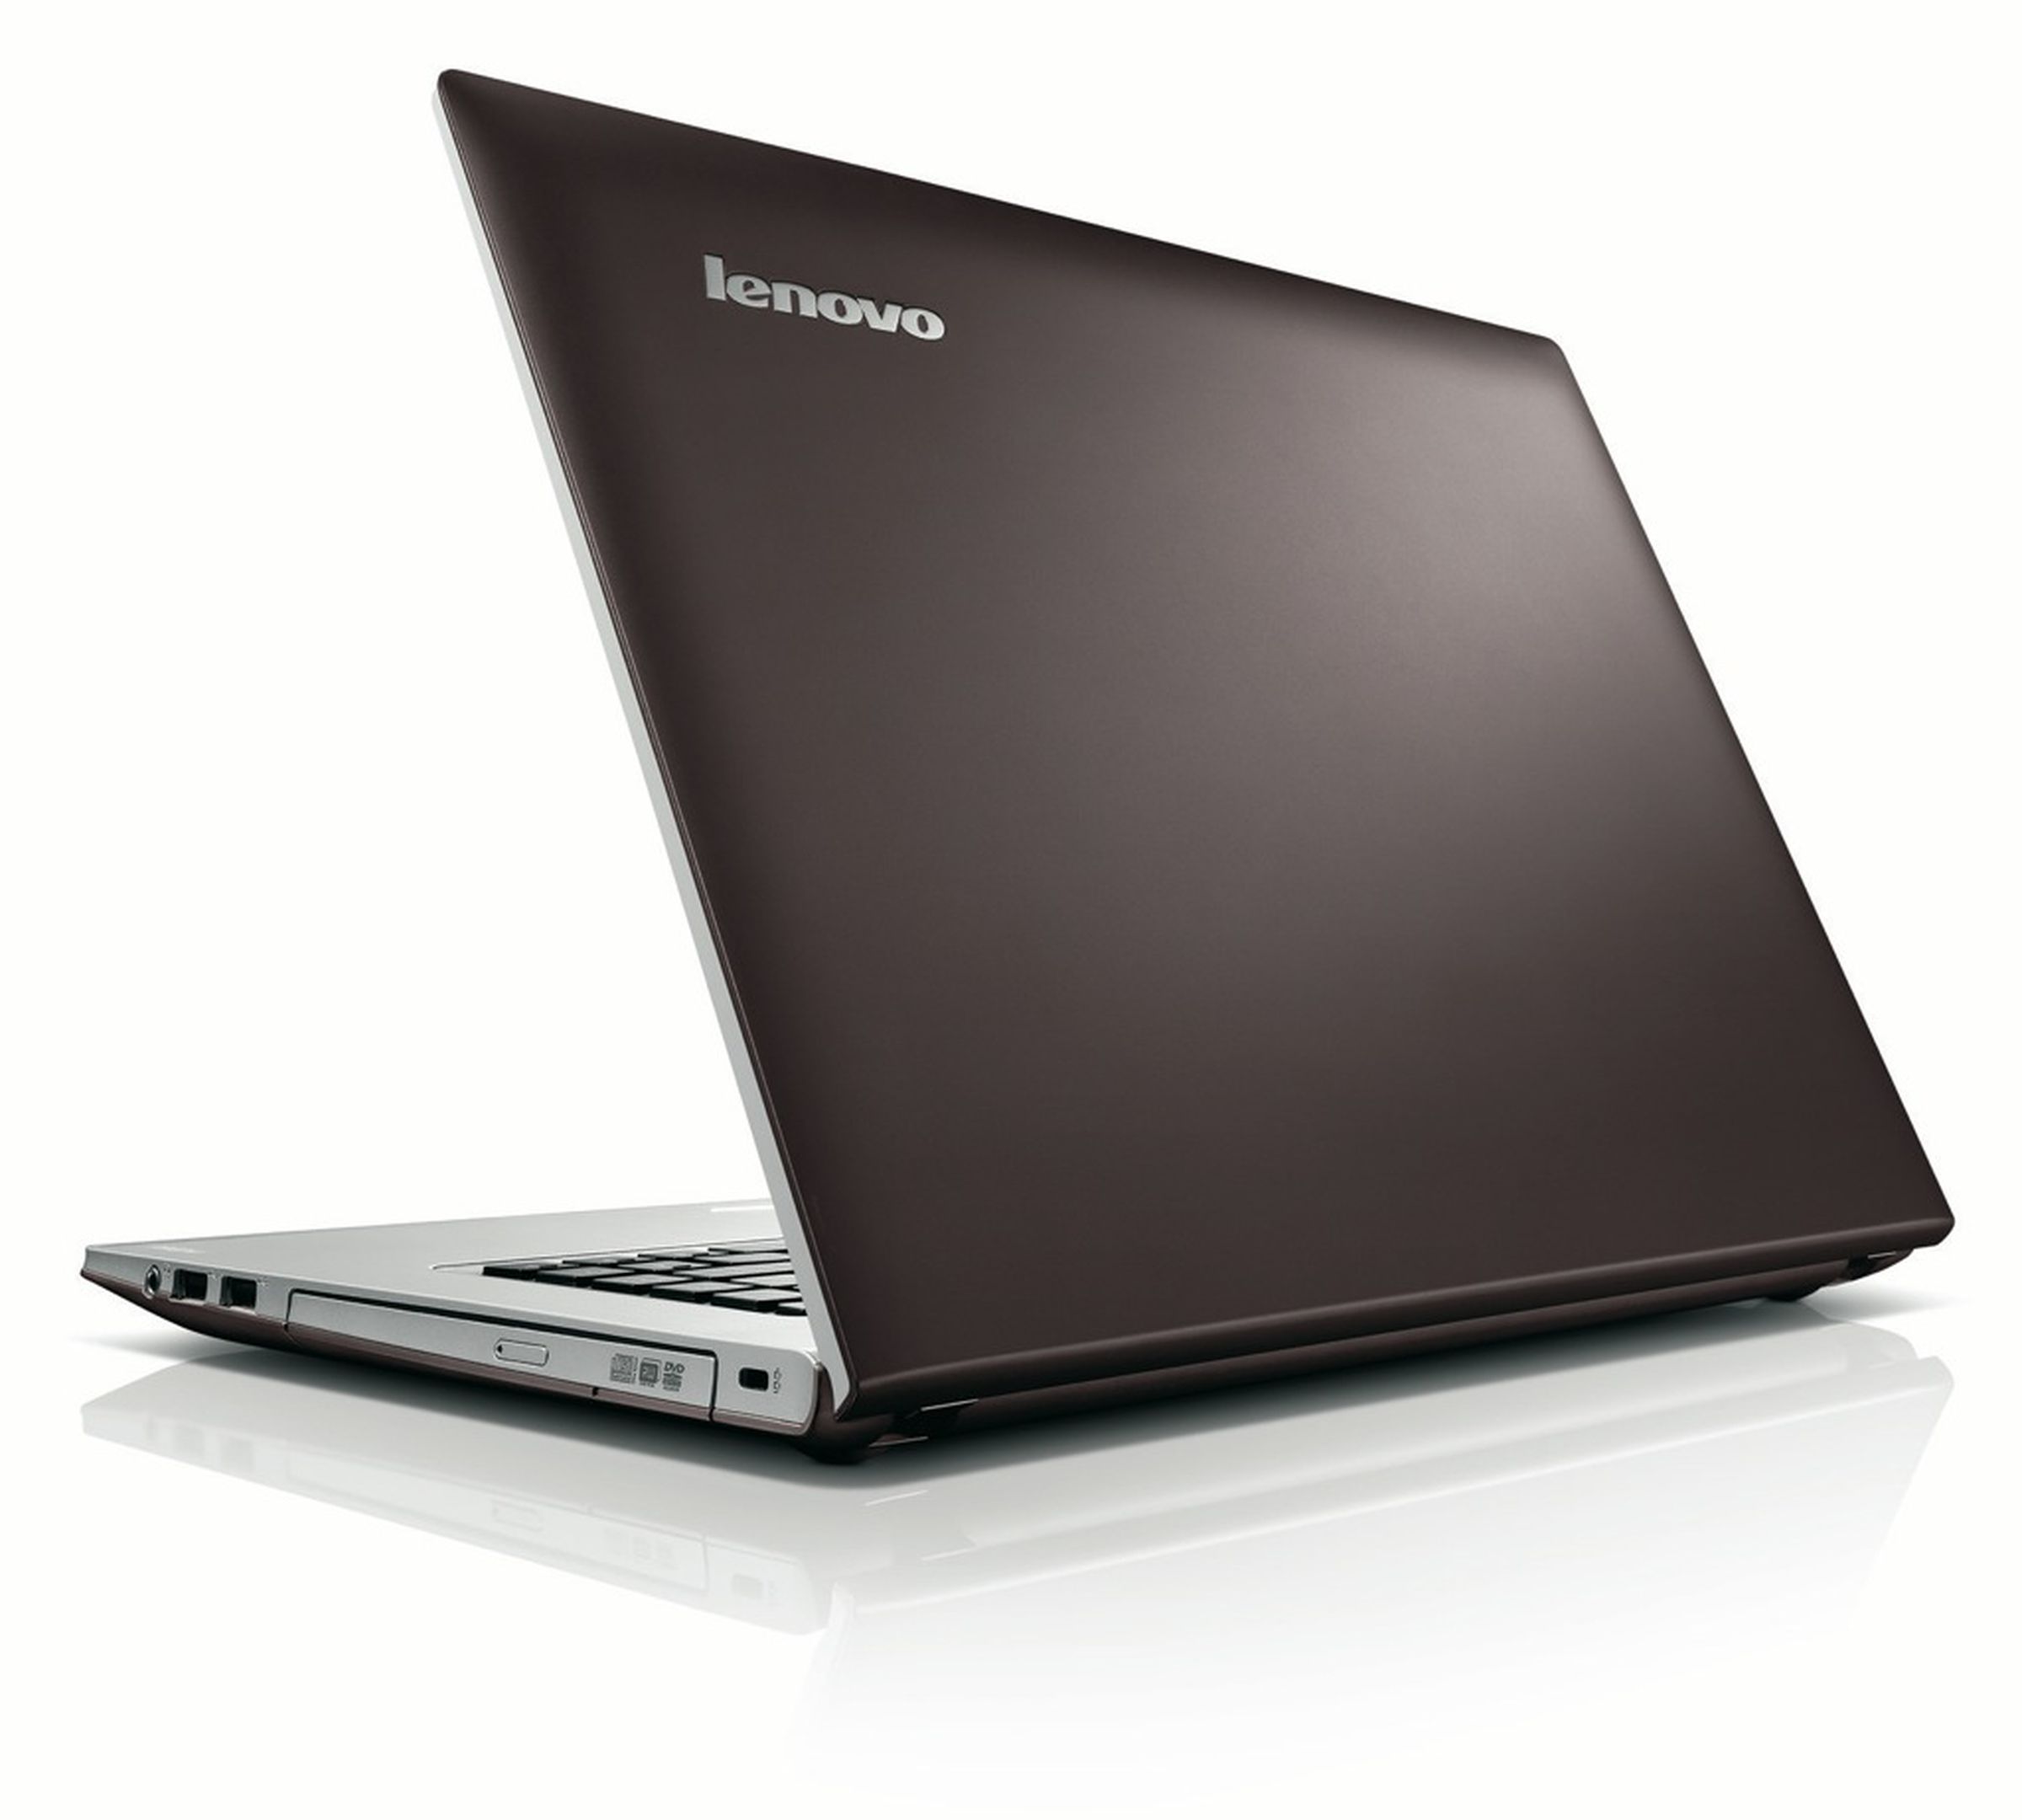 Lenovo's new IdeaPad Touch ultrabooks